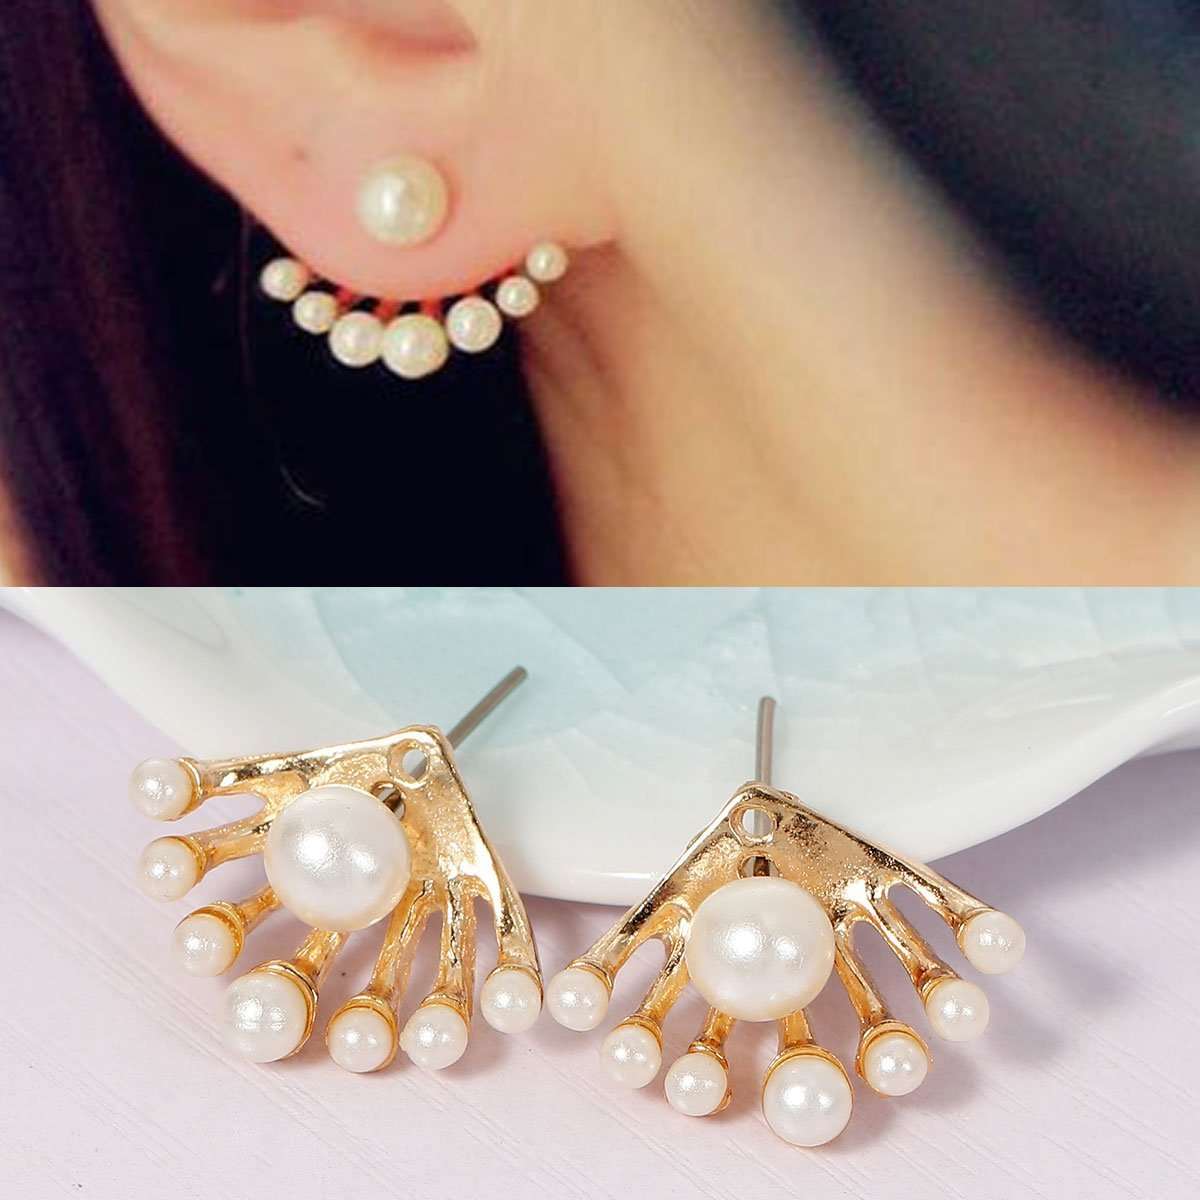 Gold Fan Earrings with Imitation Pearl - My Custom Tee Party